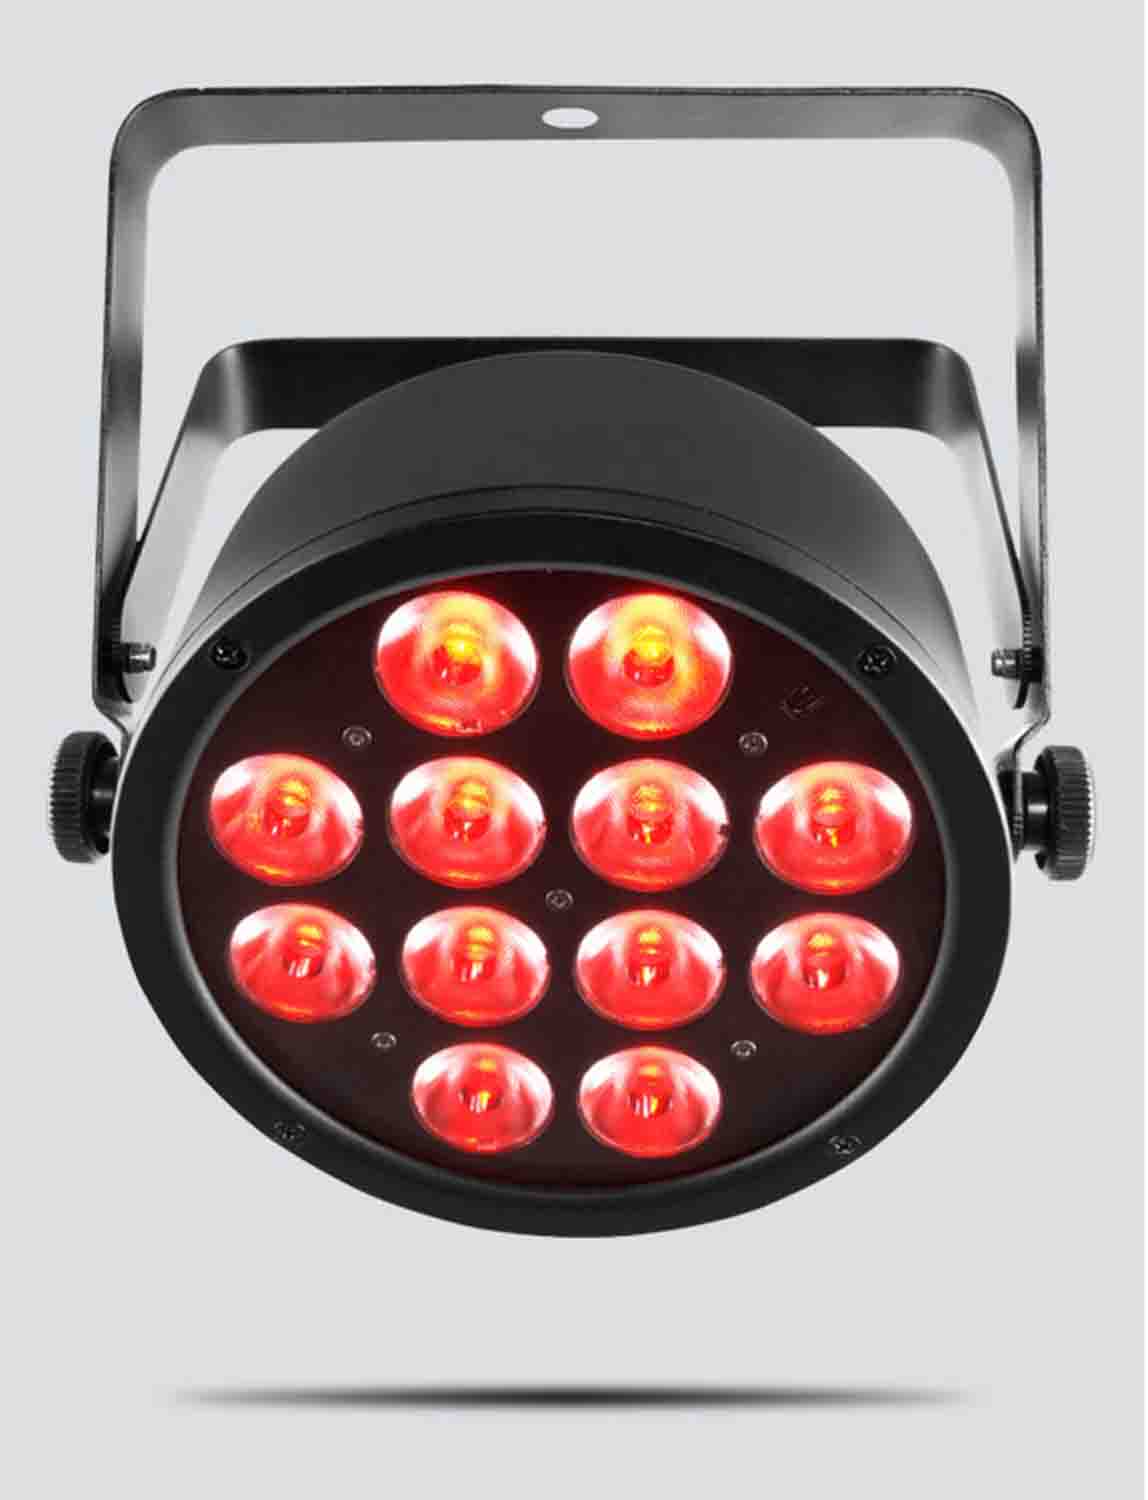 B-Stock: Chauvet DJ SLIMPART12USB D-Fi Compatible RGB LED Wash Light - Hollywood DJ